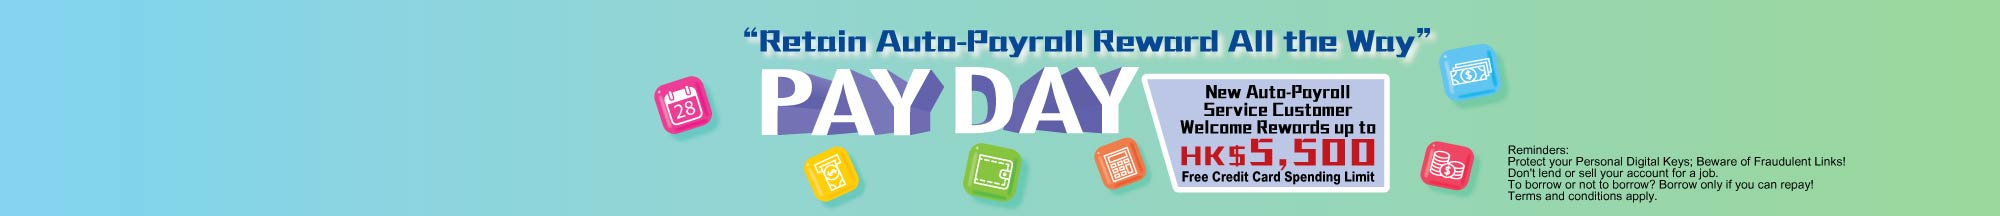 Auto-Payroll Service